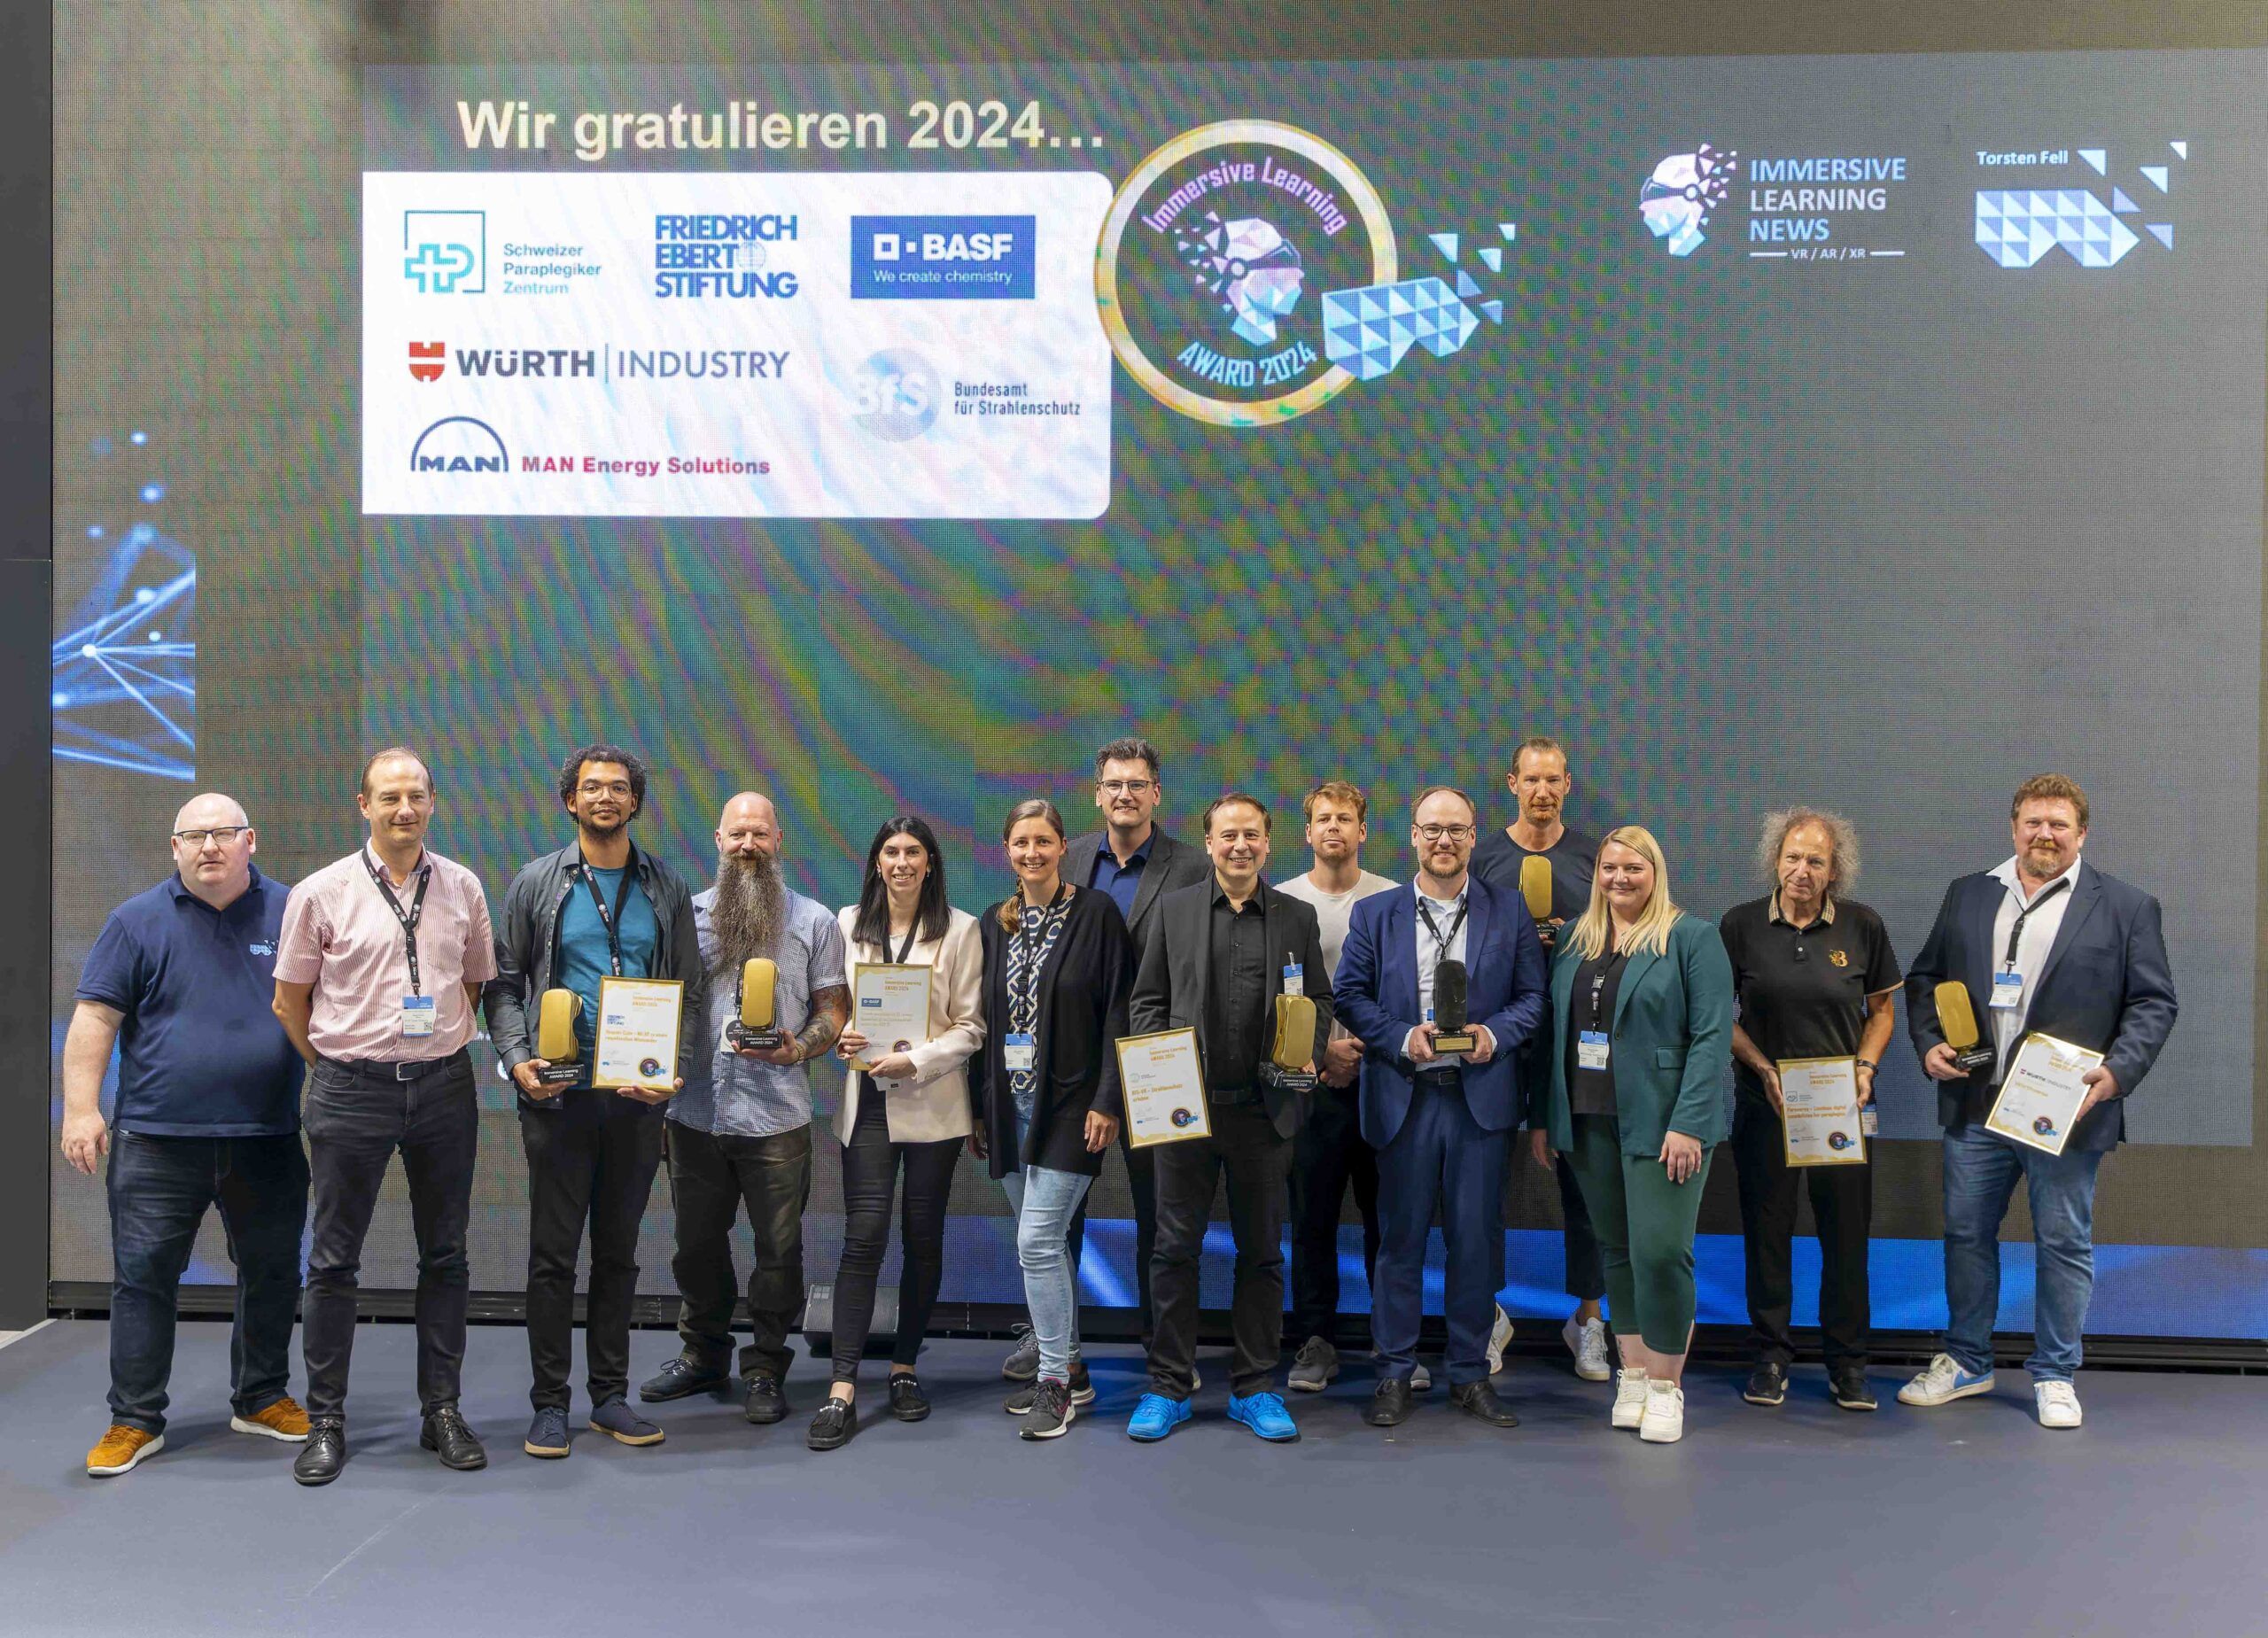 Immersive Learning Award 2024 viality AG Bundesamt für Strahlenschutz Virtual Reality Anwendung